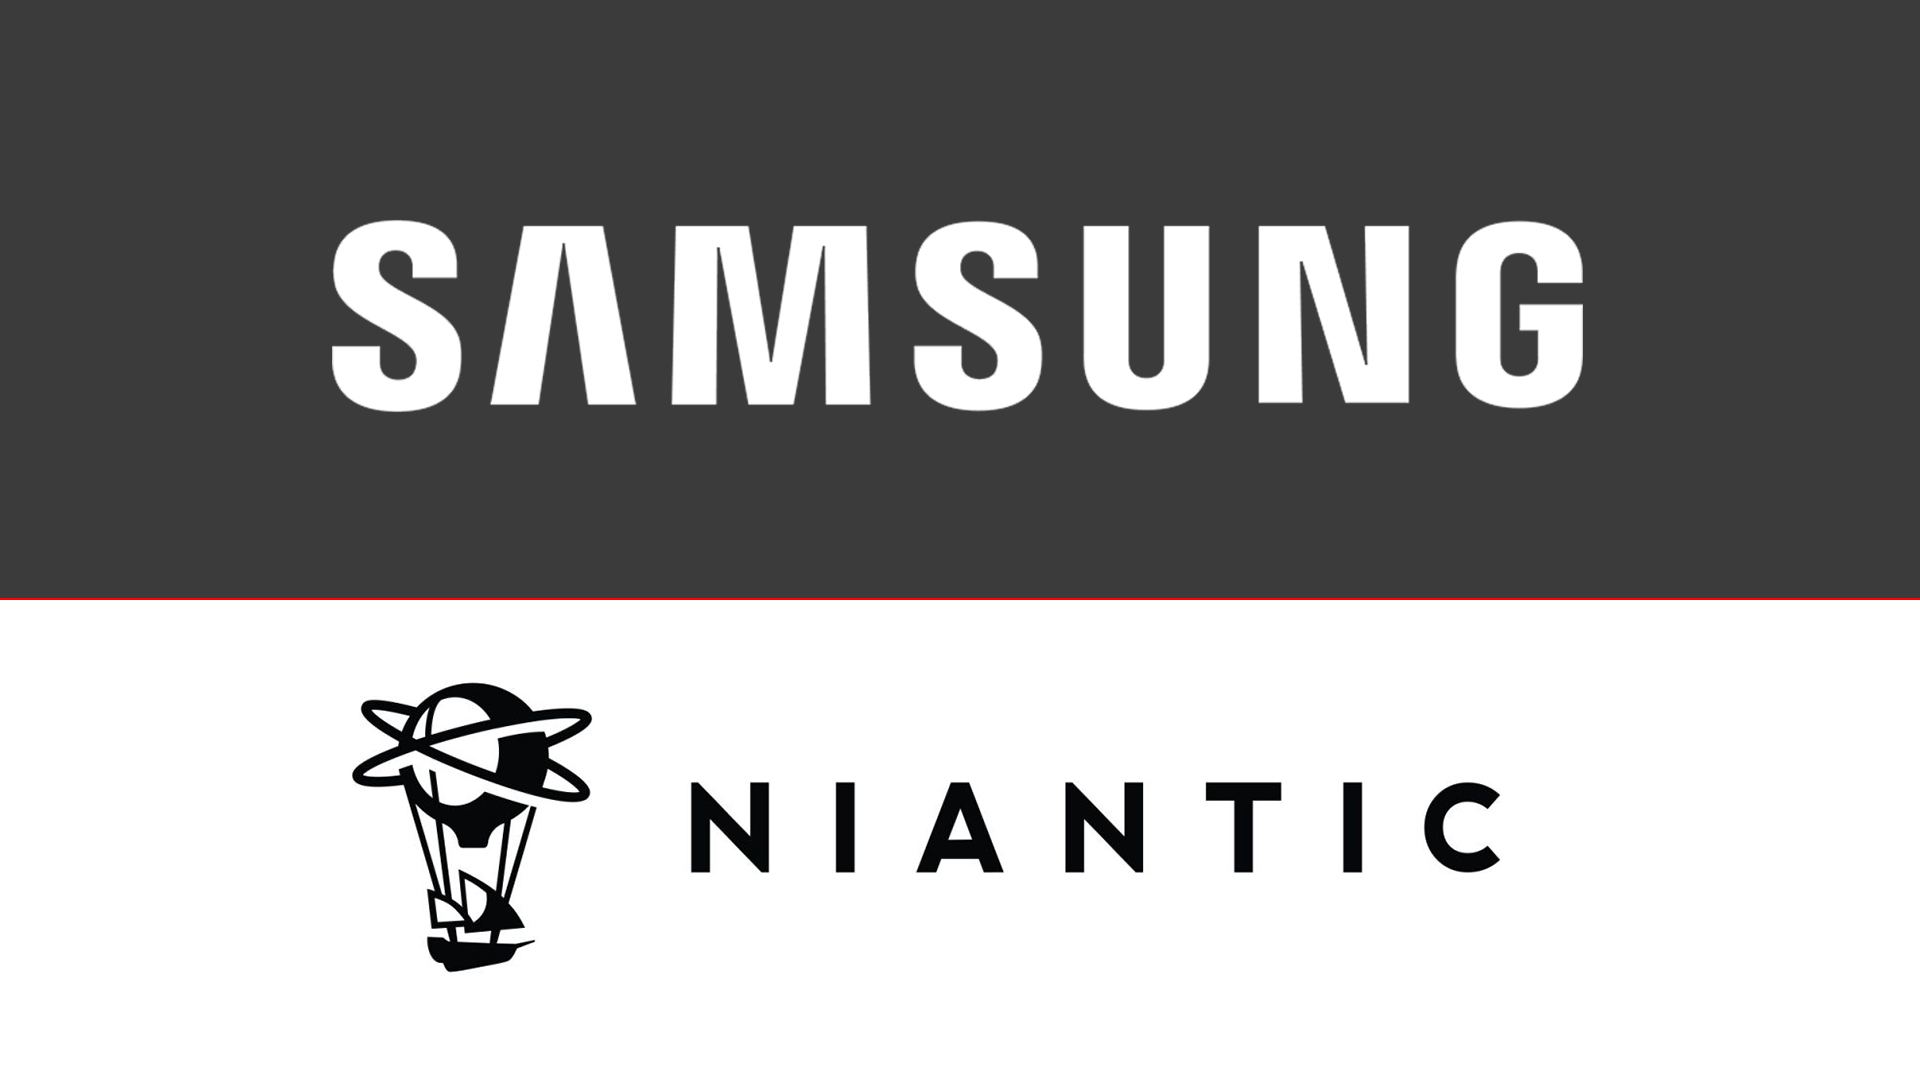 SamsungNiantic